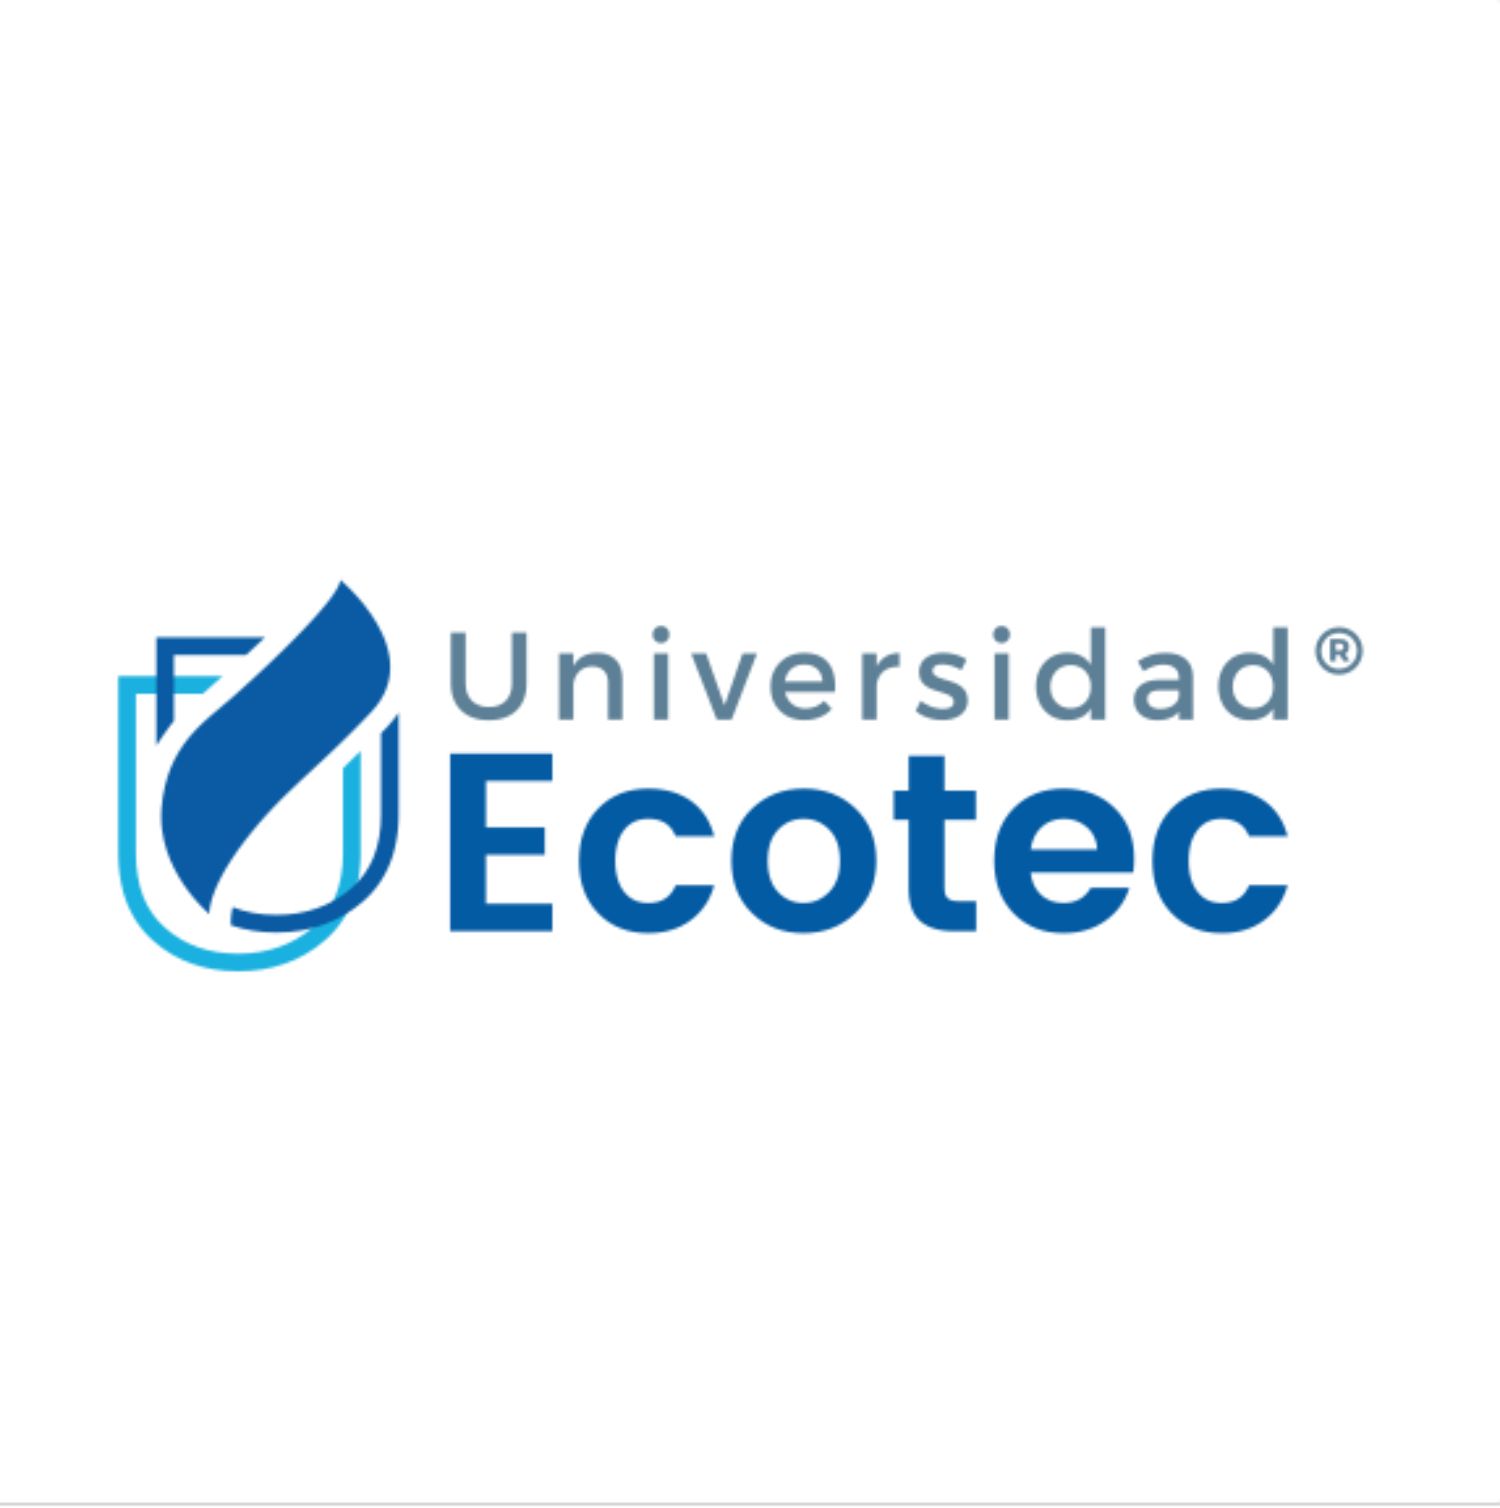 Universidad ECOTEC